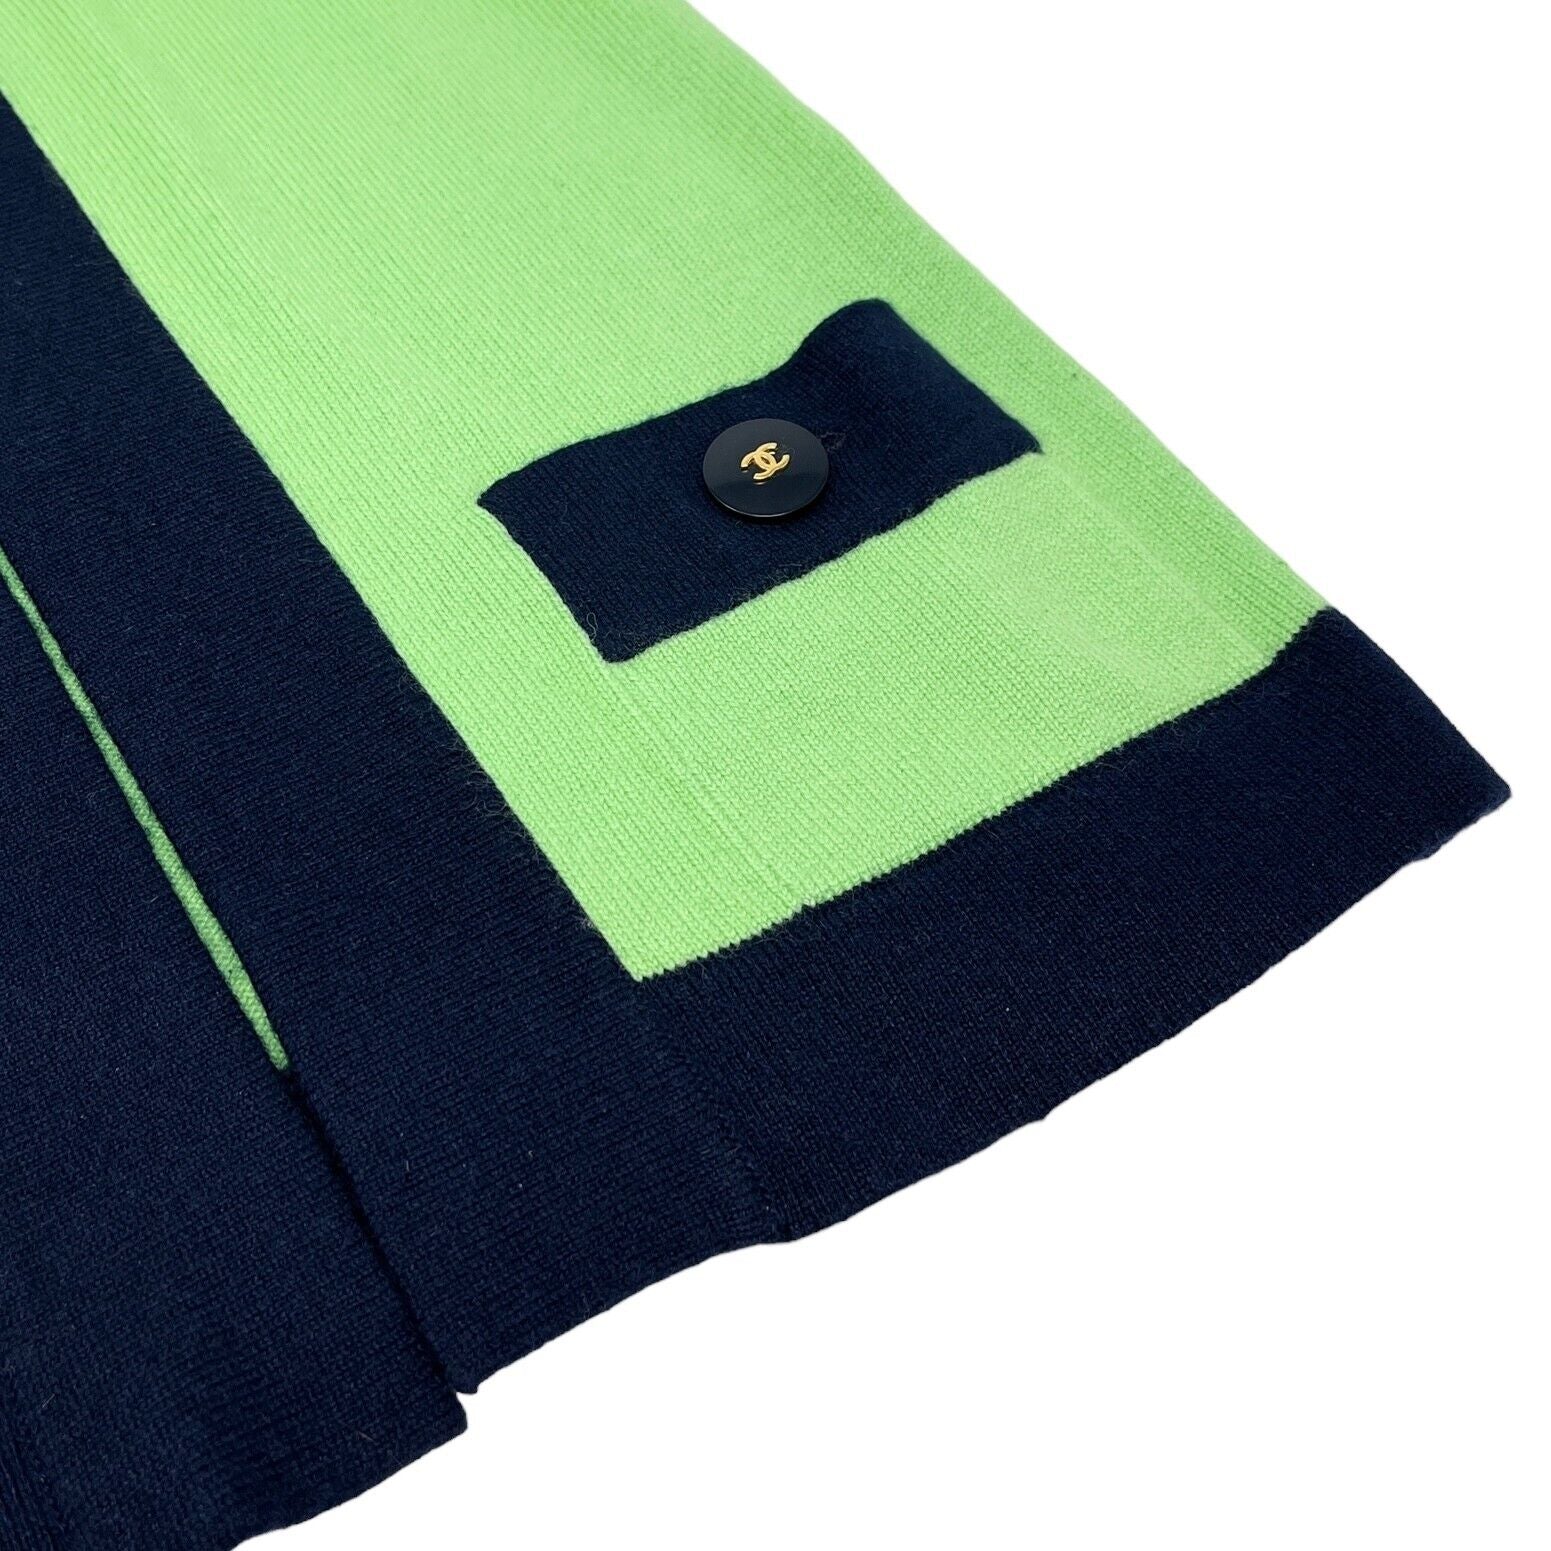 CHANEL Vintage 97C CC Mark Open Front Cardigan #40 Bicolor Green Rank AB+